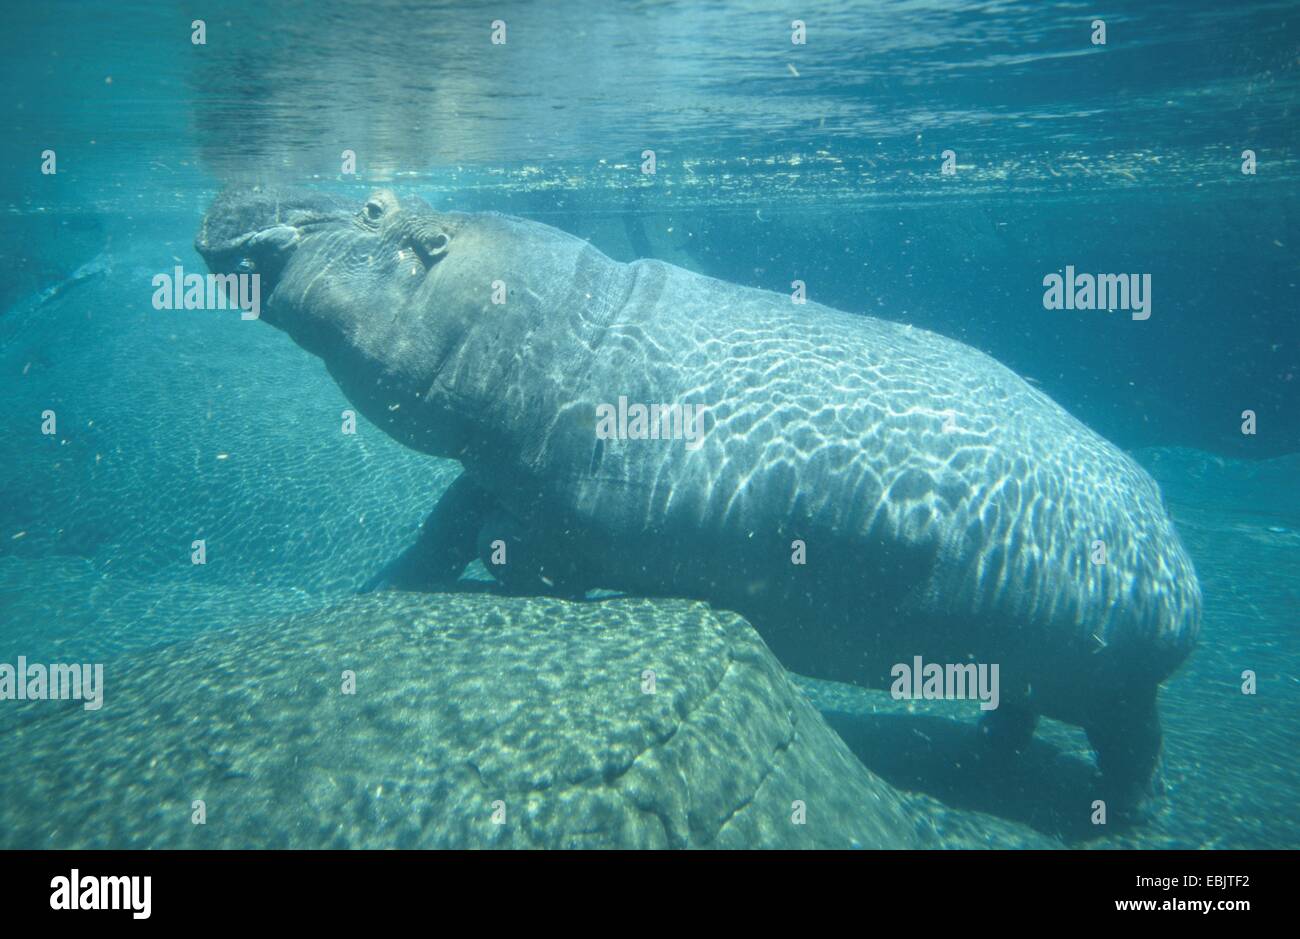 Hipopótamo o hipopótamo (Hippopotamus amphibius), bajo el agua. Foto de stock